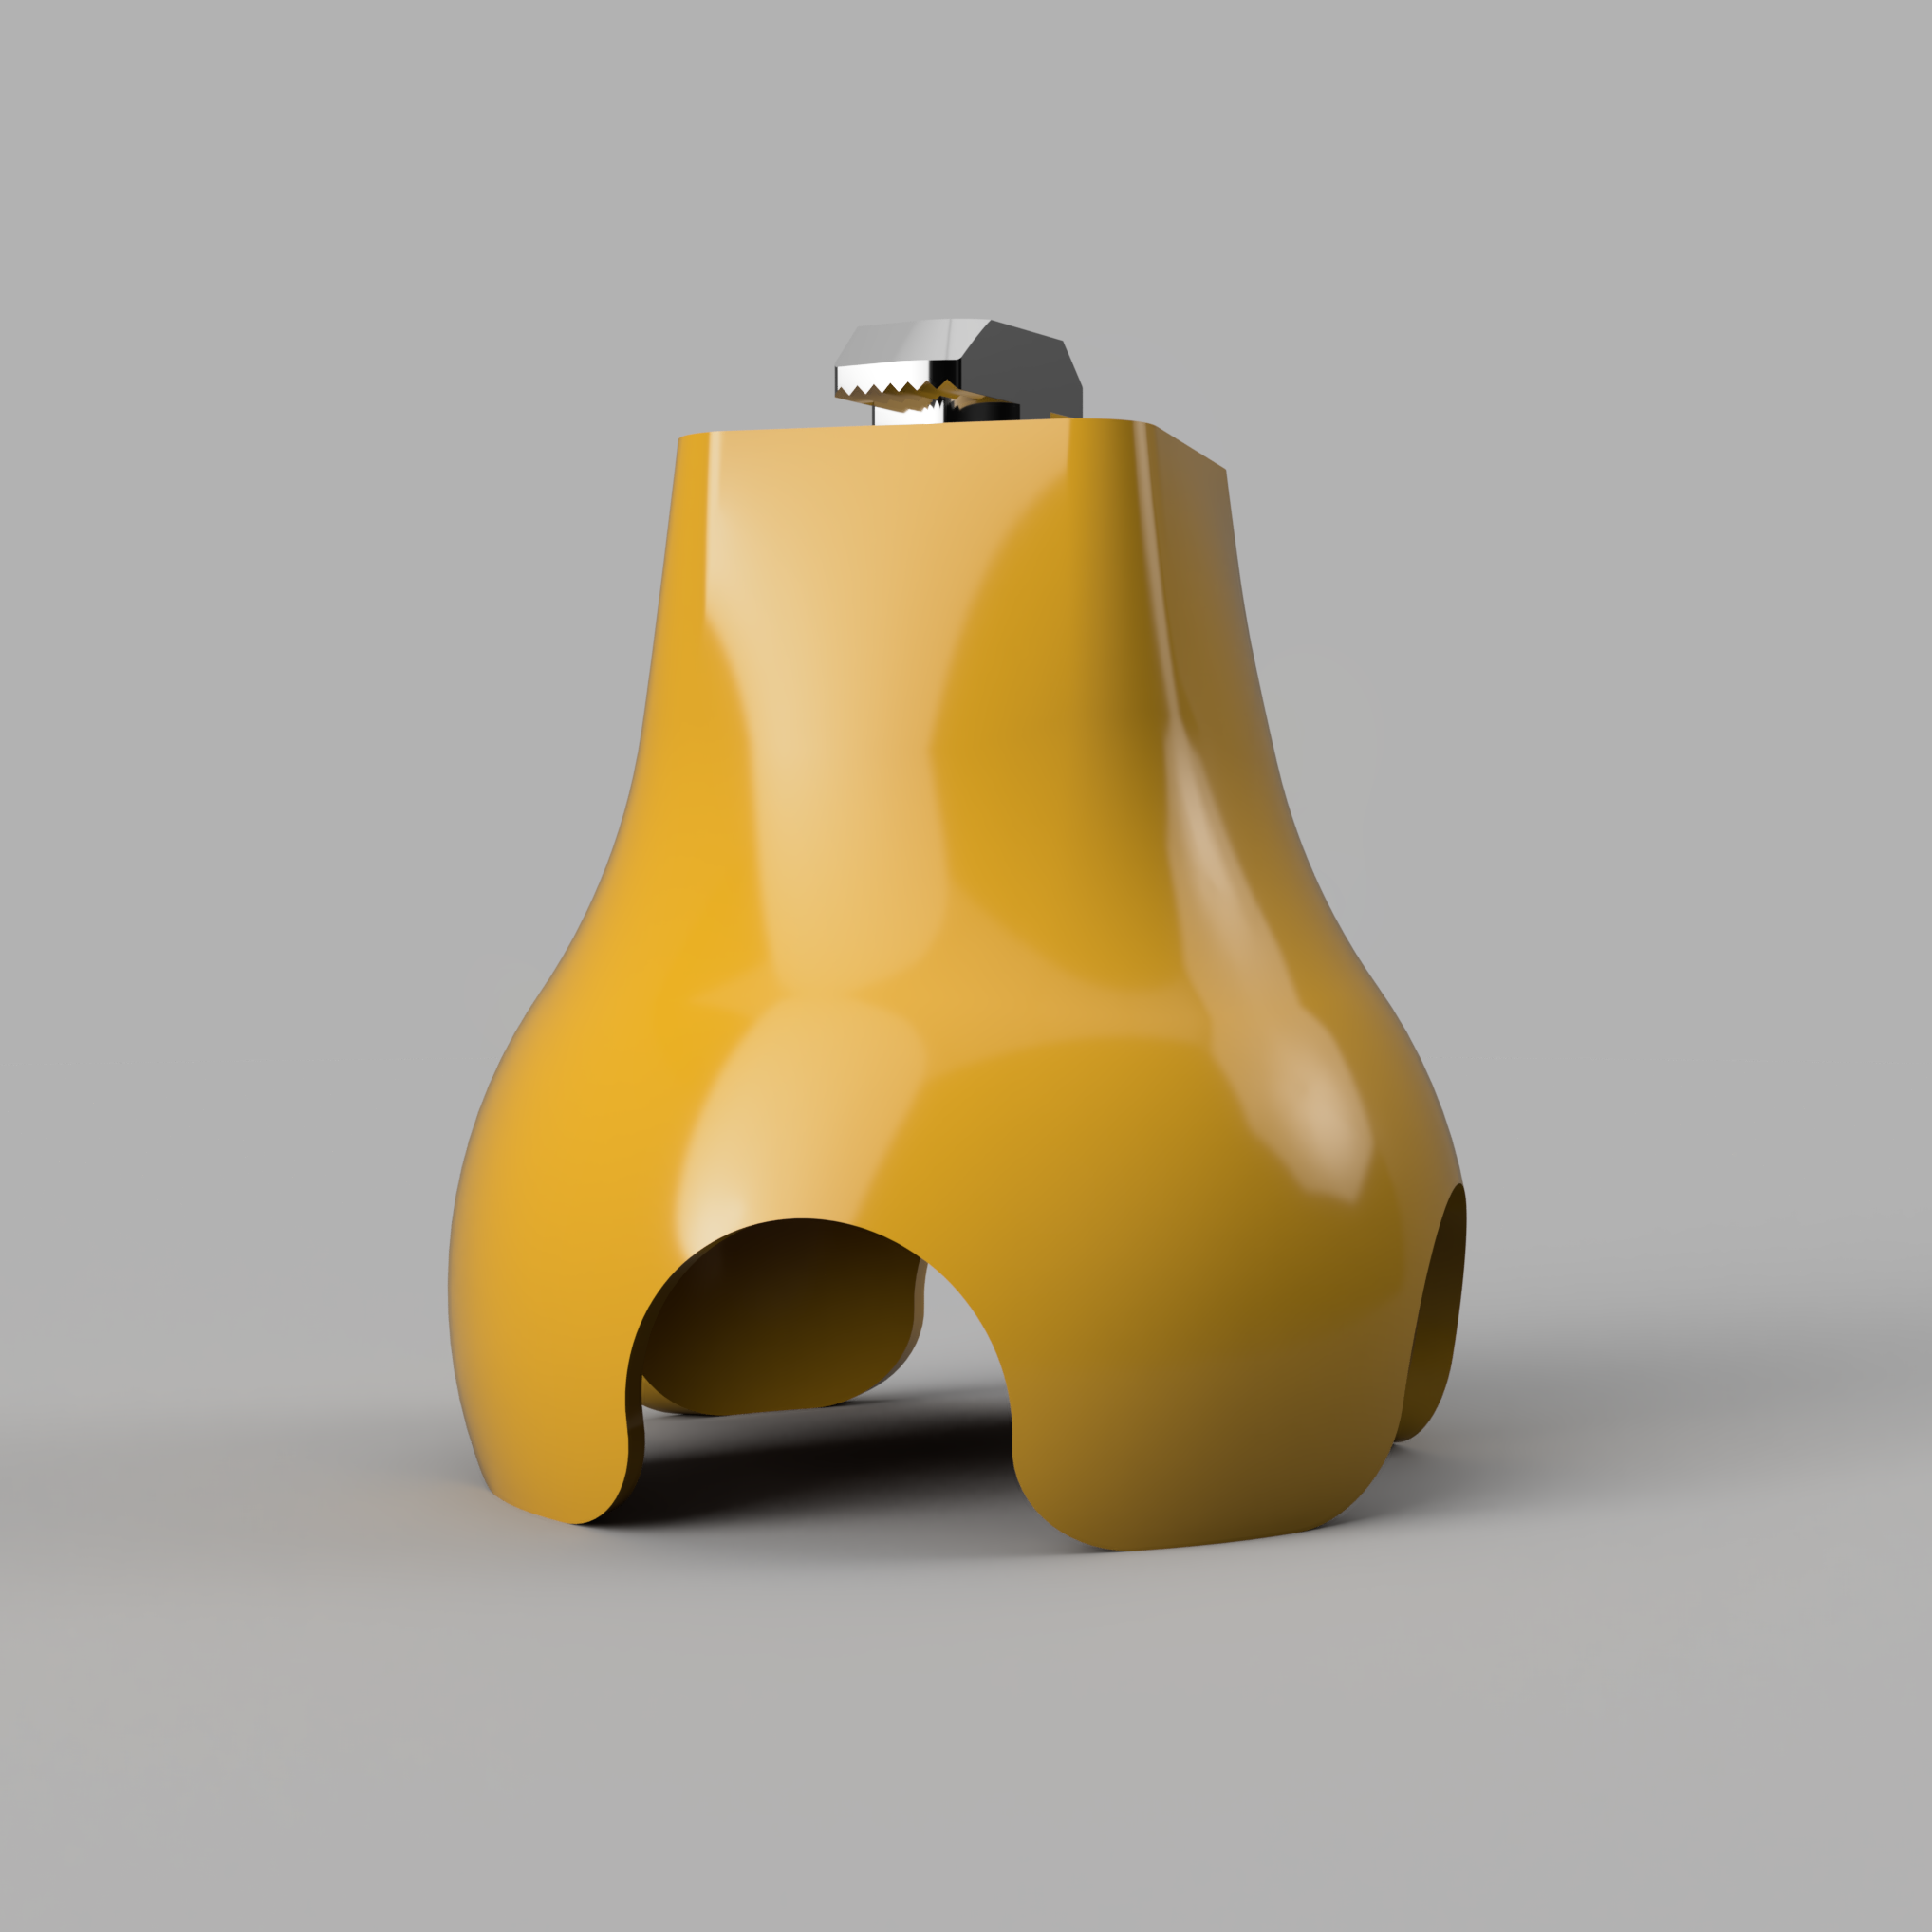 Squash ball foot for 3D printers